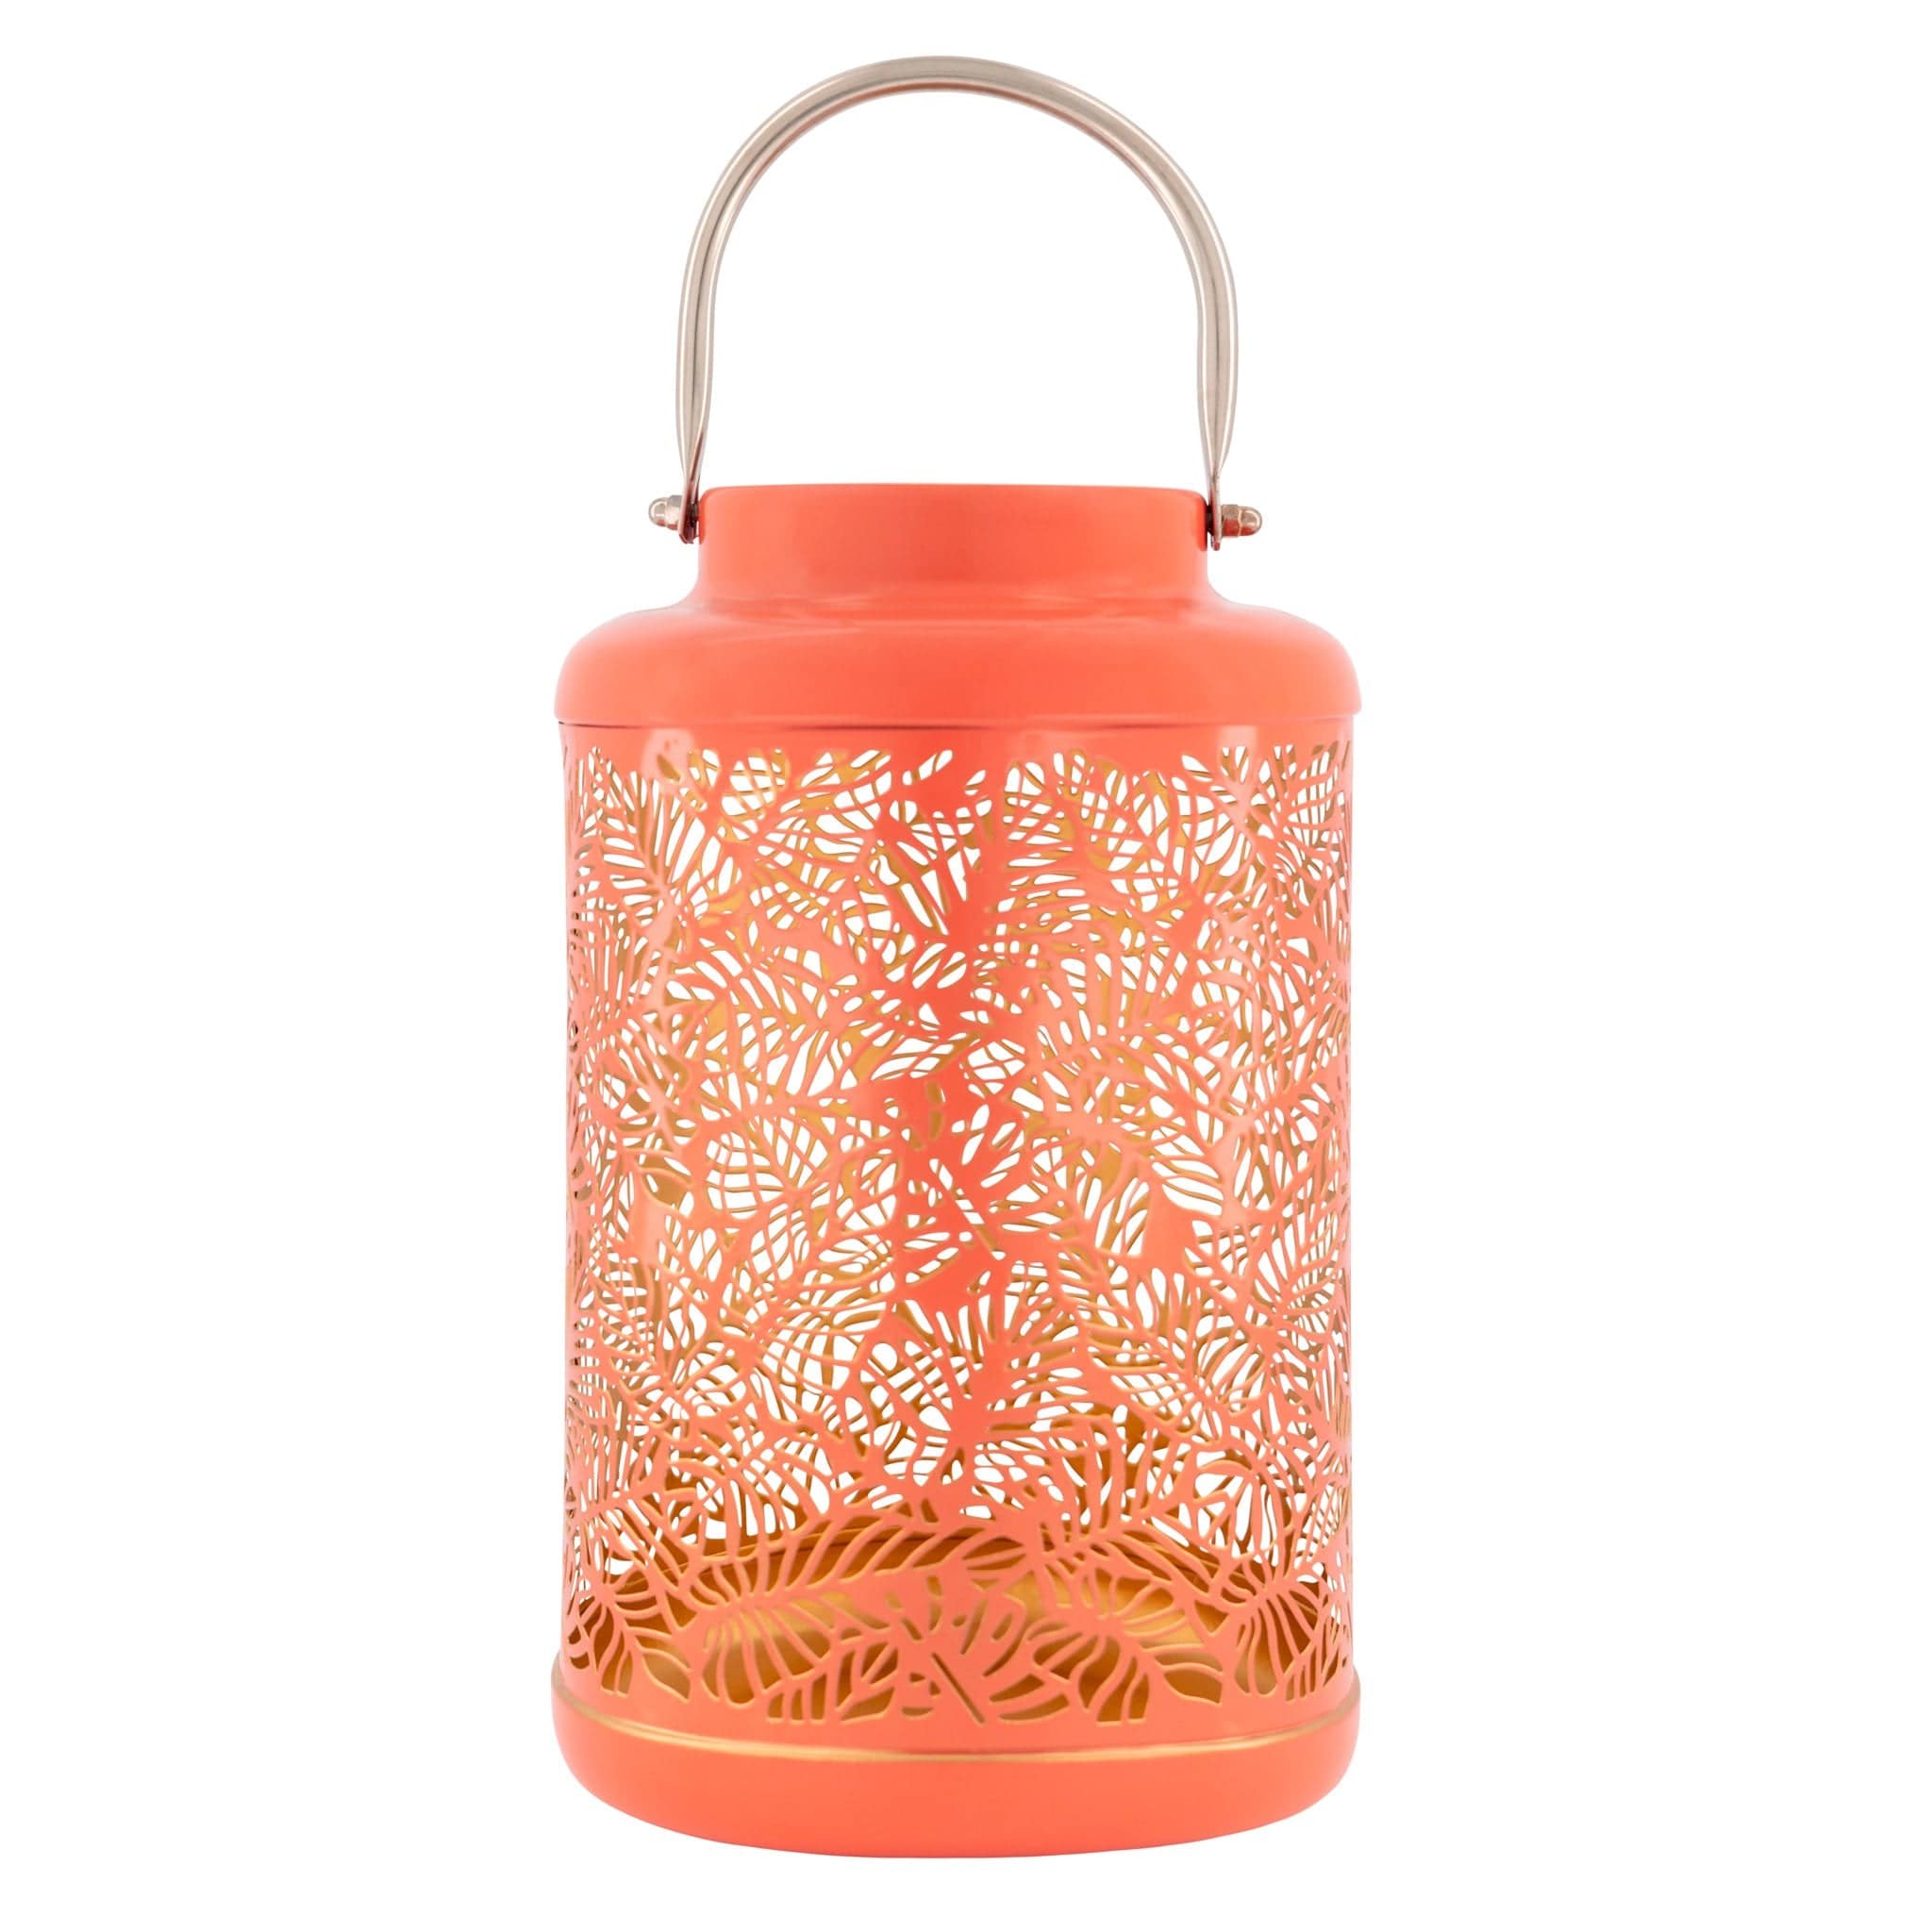 Decorative Metal Lantern - Coral - 27cm 8718317663468-CORAL